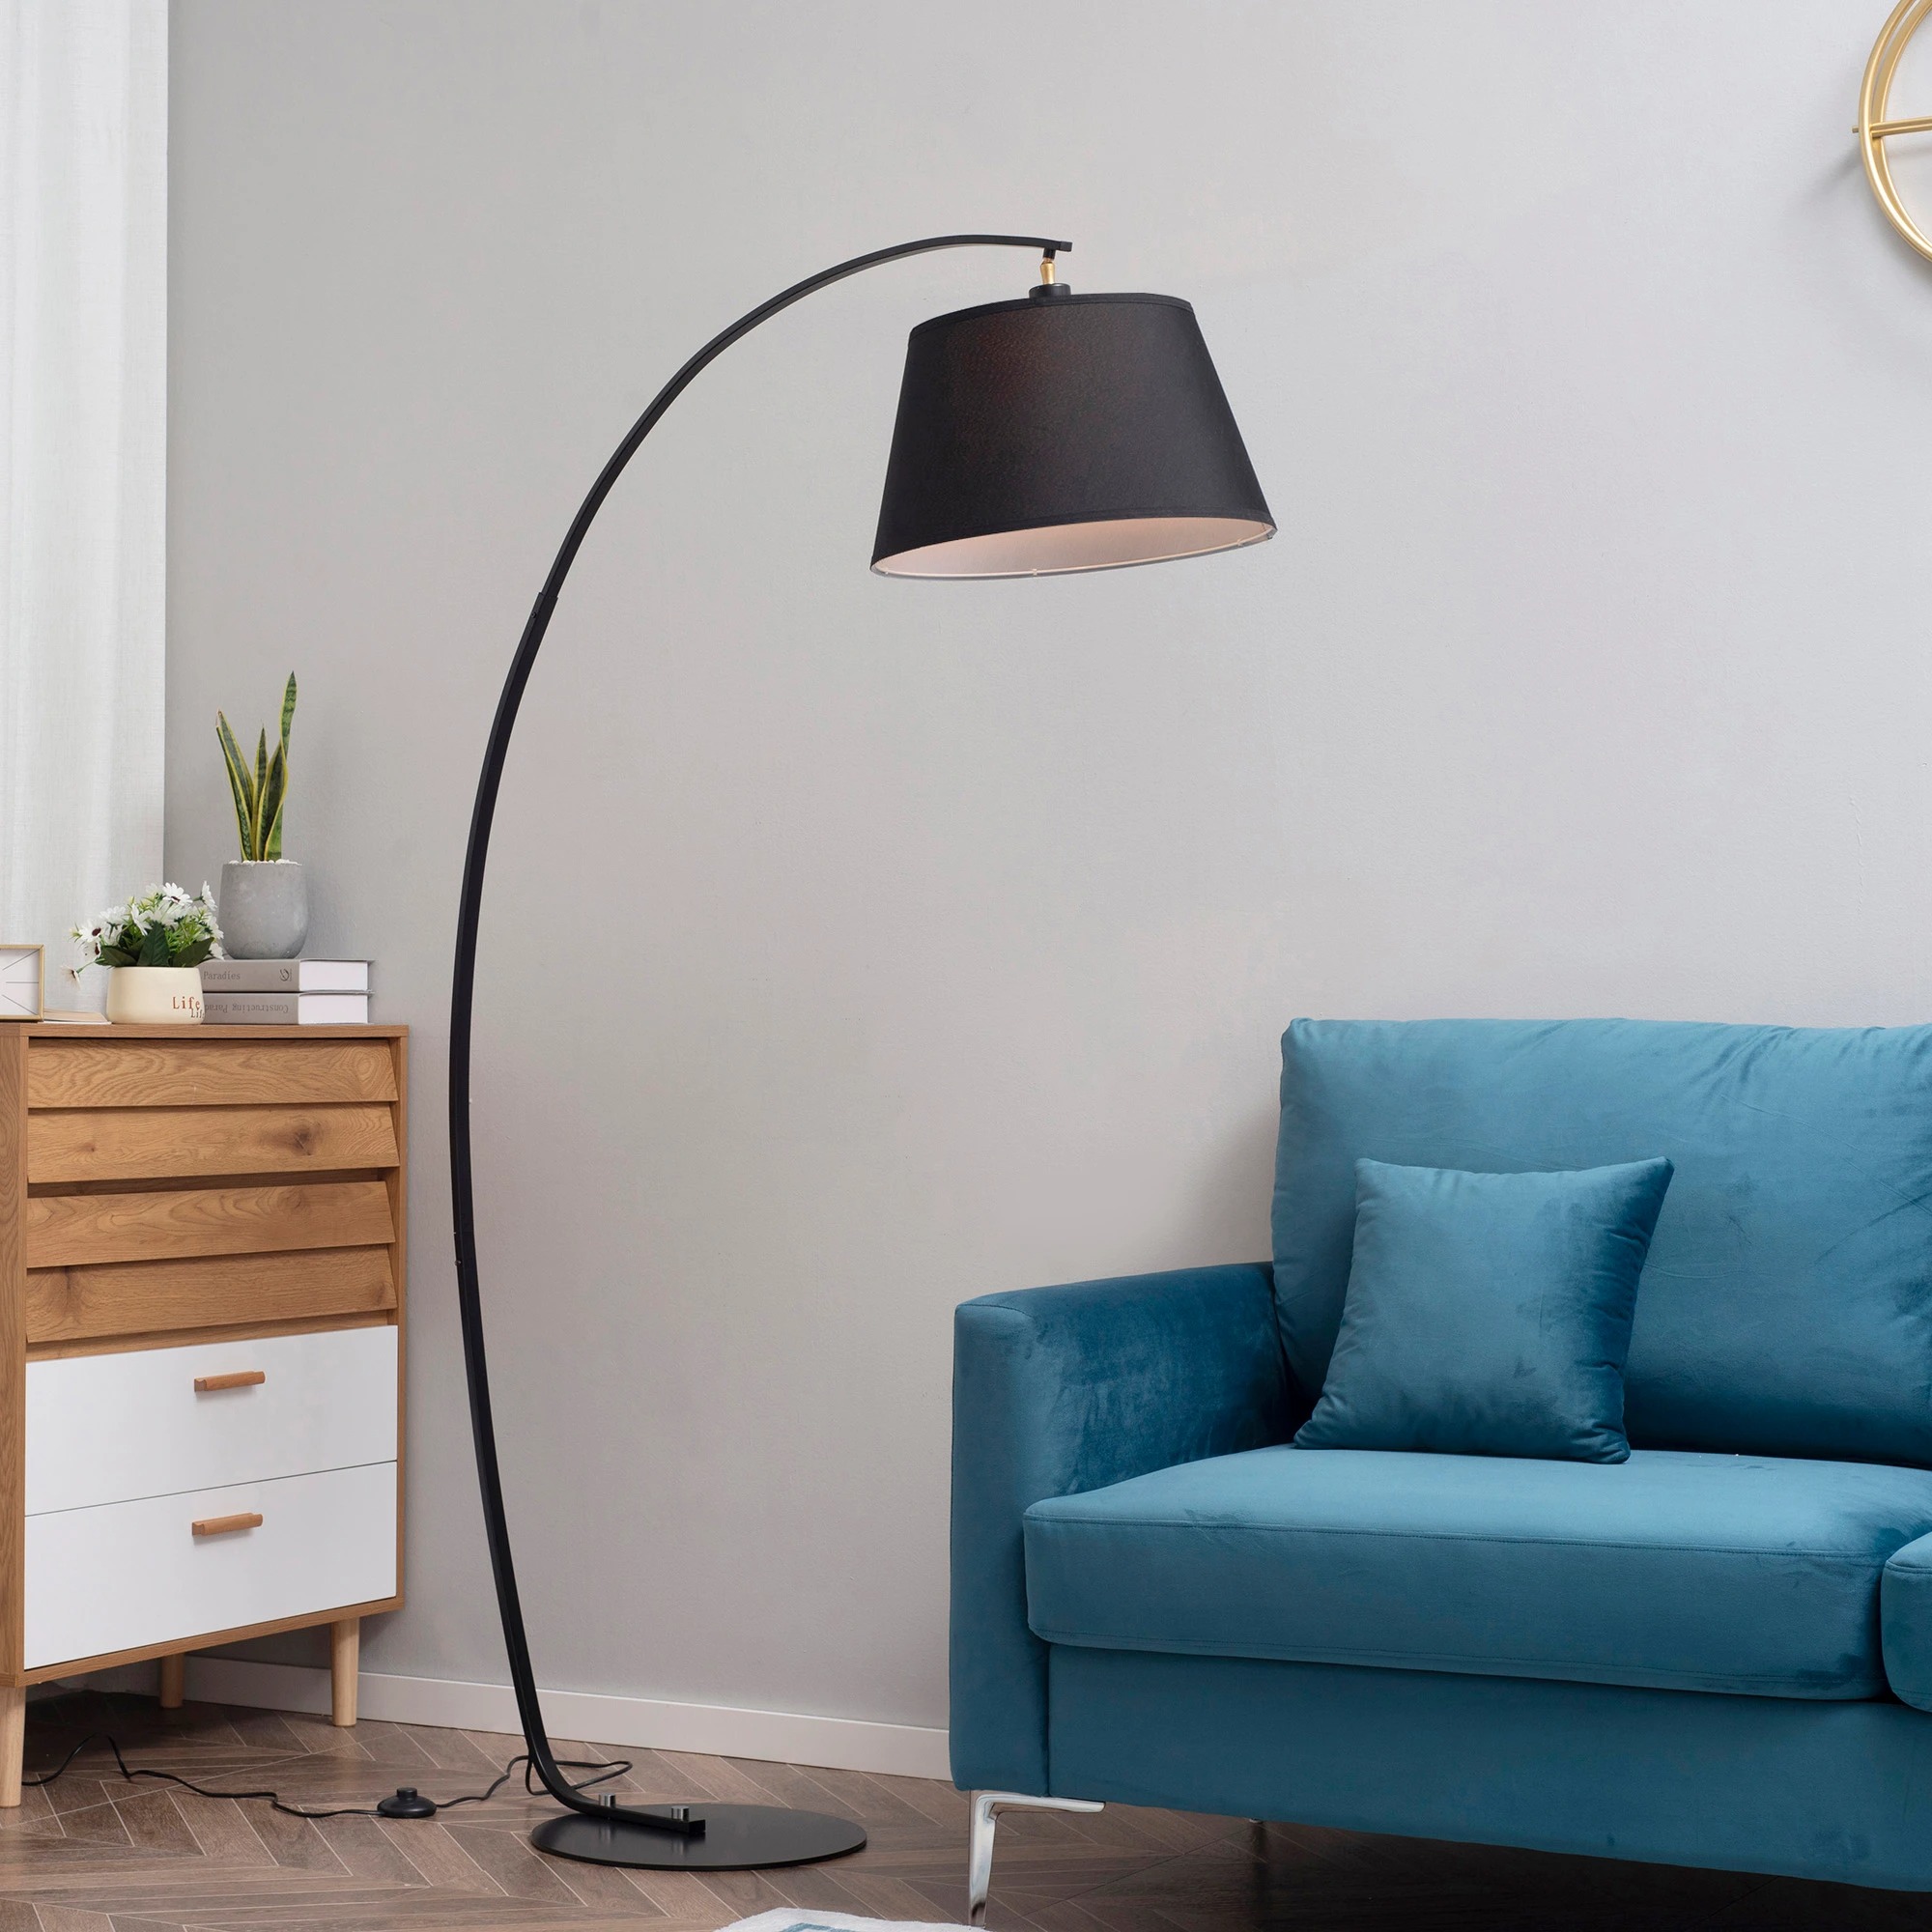 HOMCOM Floor Lamp, Modern Standing Lamp with Arc Design, Foot Switch & Metal Base